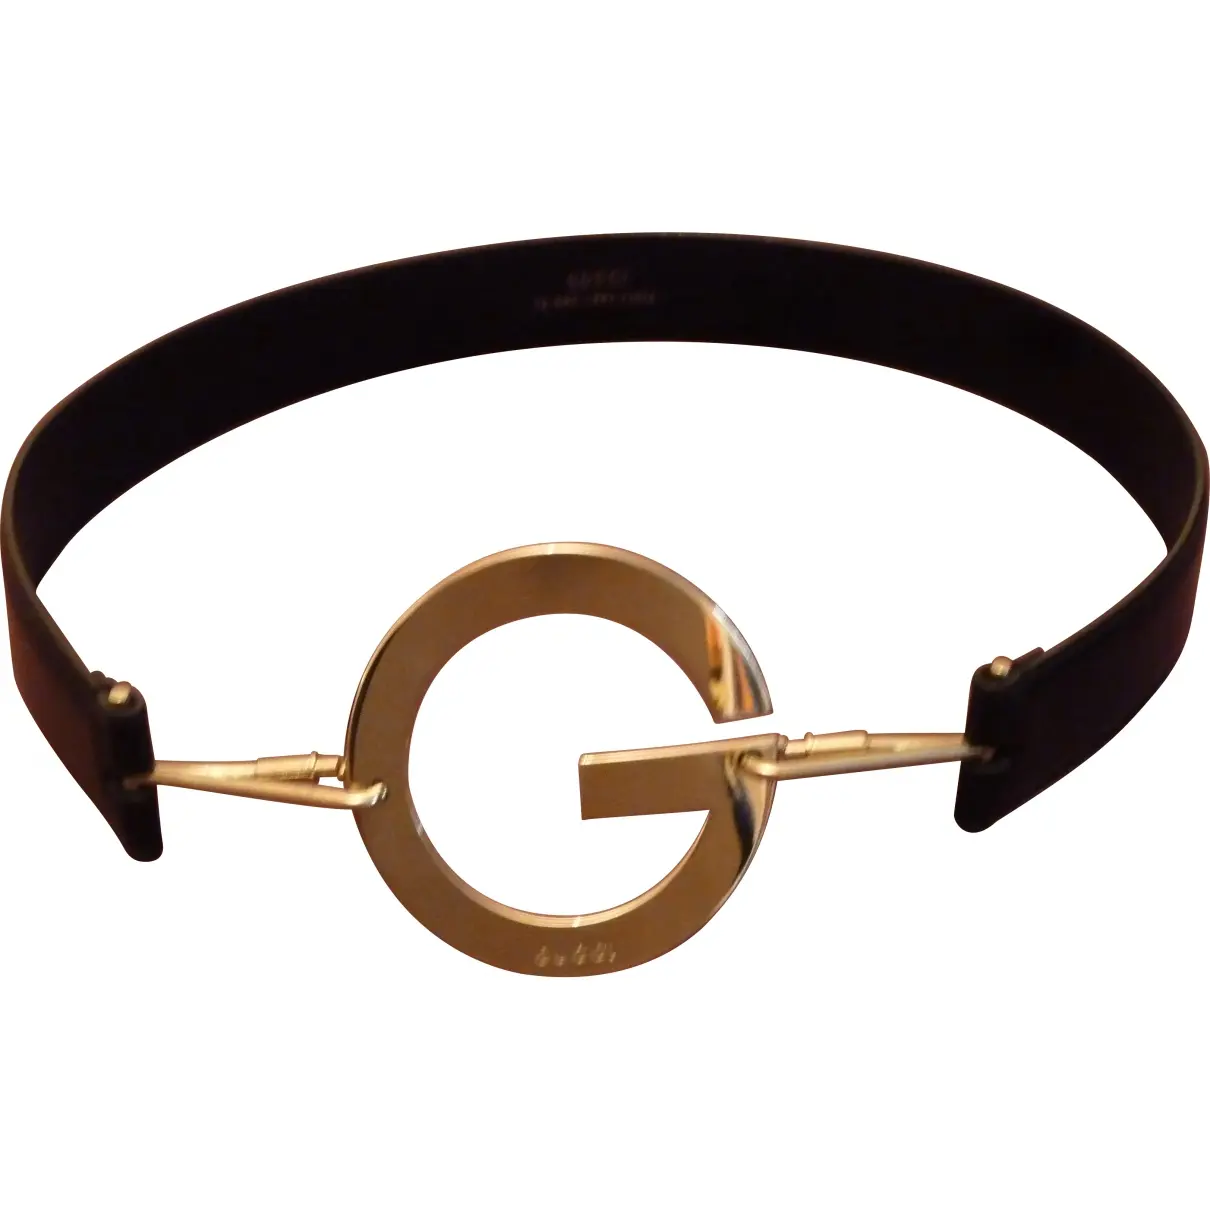 Black Patent leather Belt Gucci